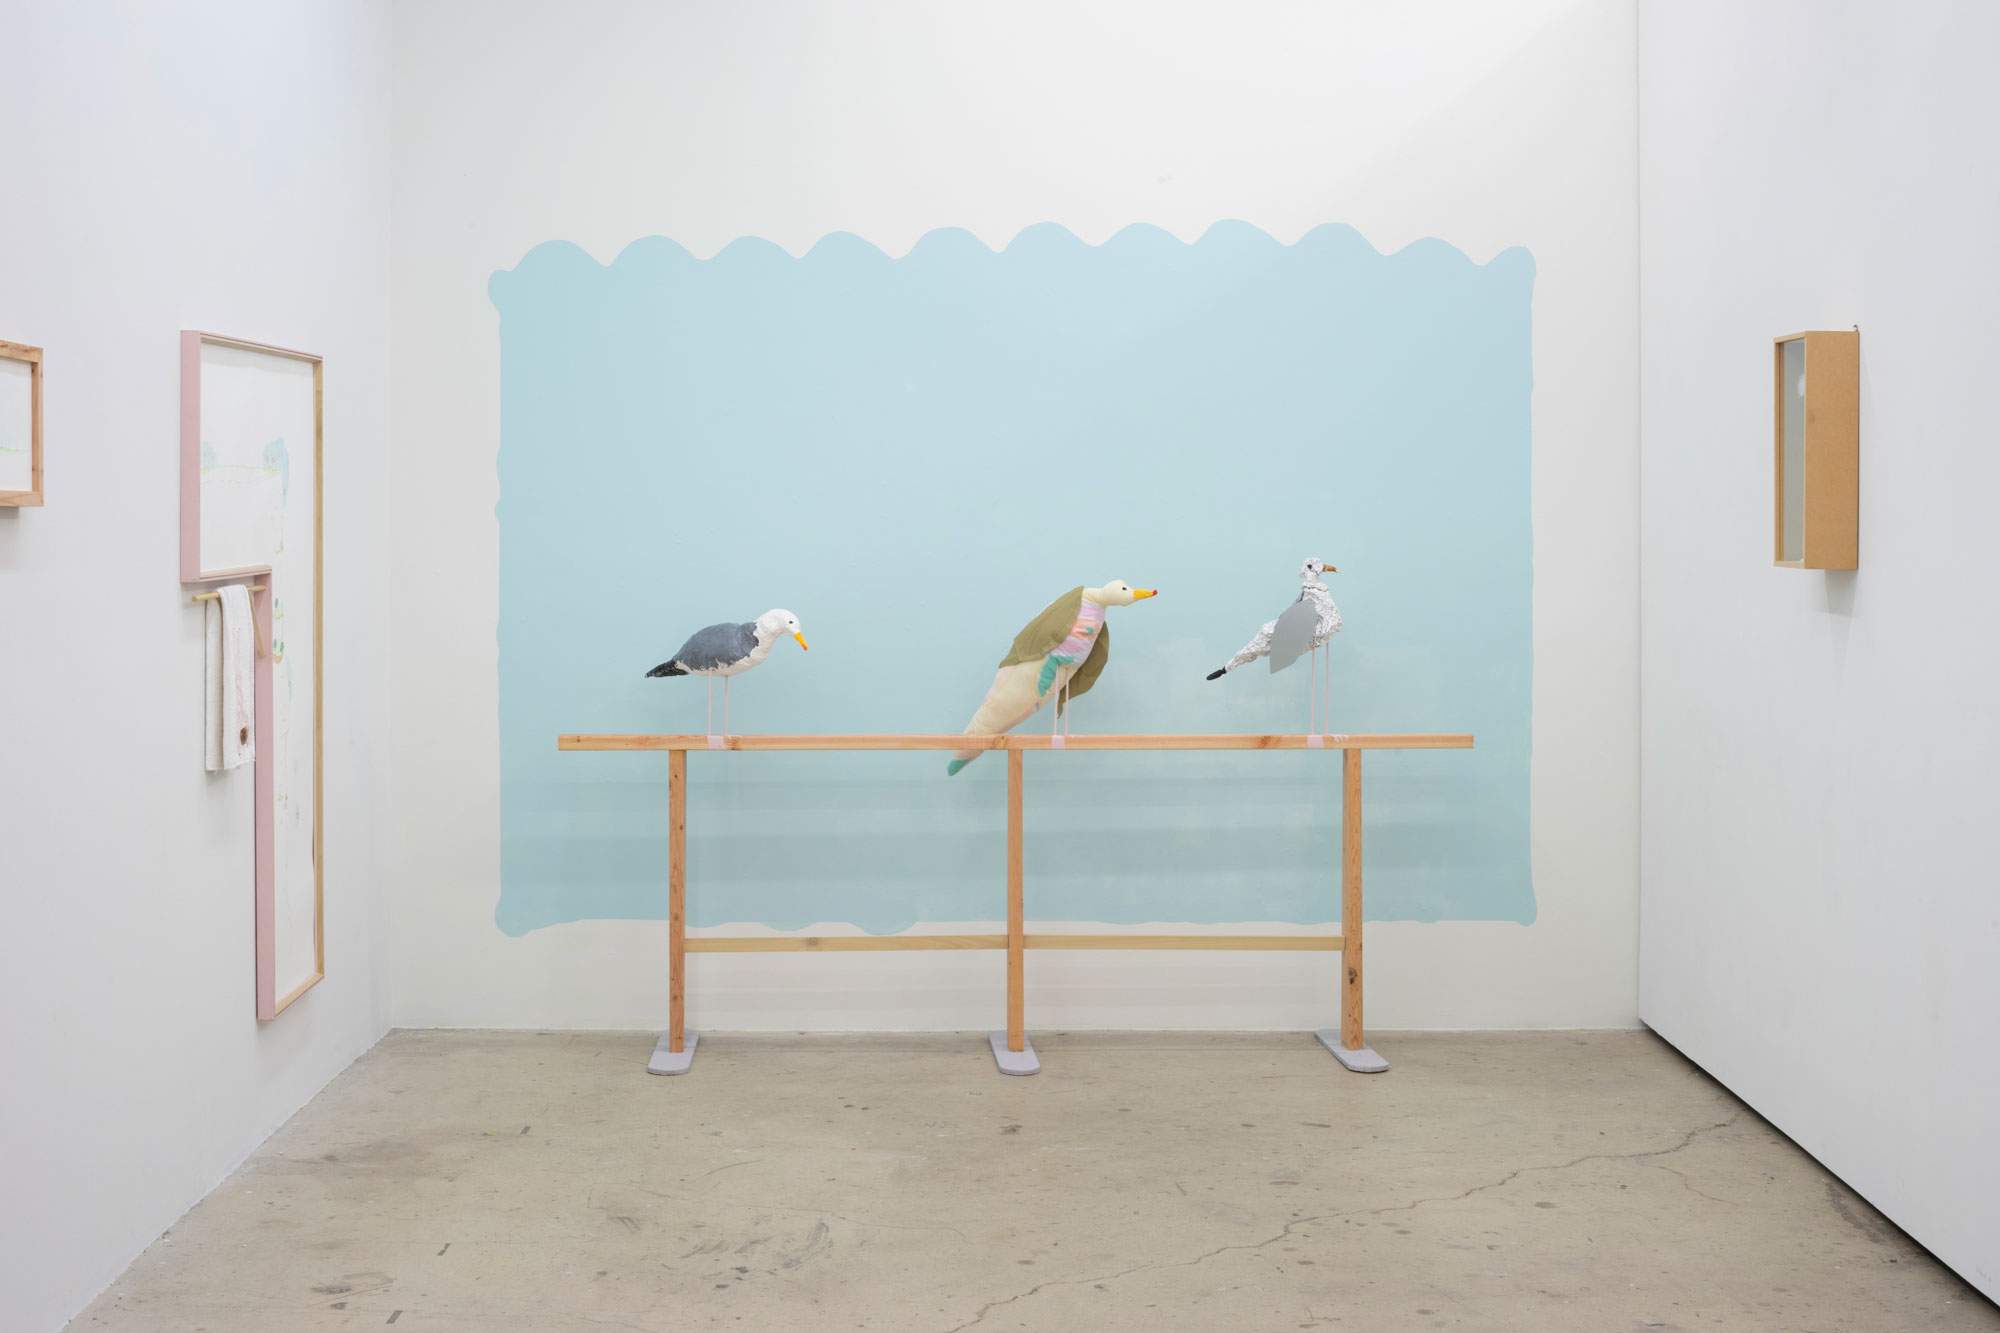 Image of Three Pigeons artwork by Sean Randolph, 2020 graduate of Graduate Art MFA program..